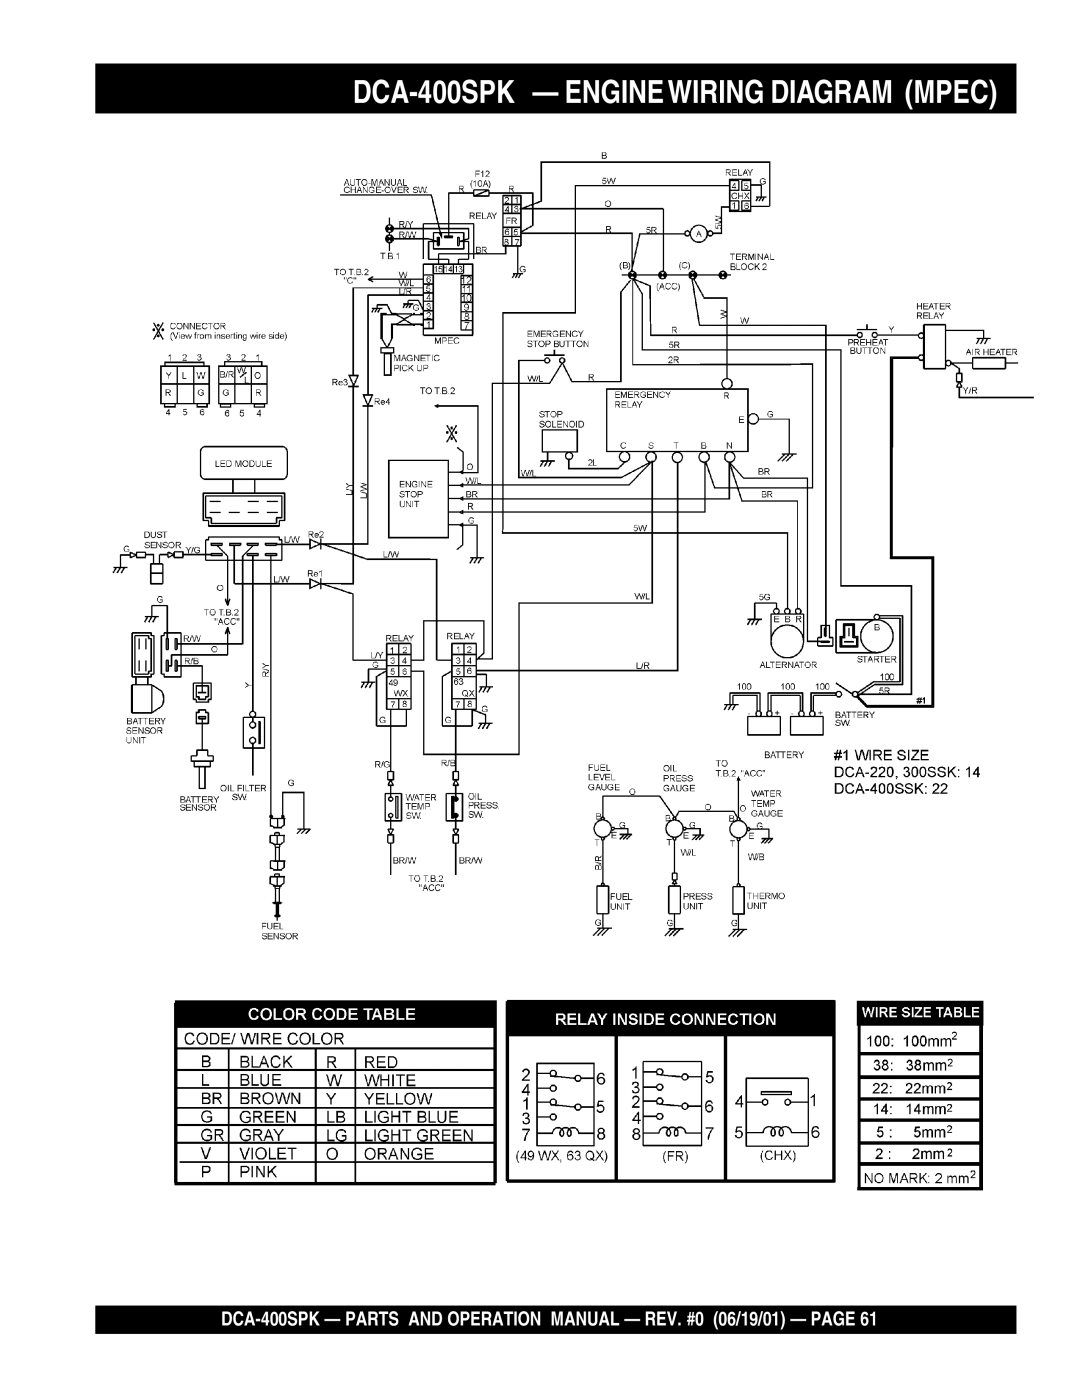 Multiquip operation manual DCA-400SPK— ENGINE WIRING DIAGRAM MPEC 